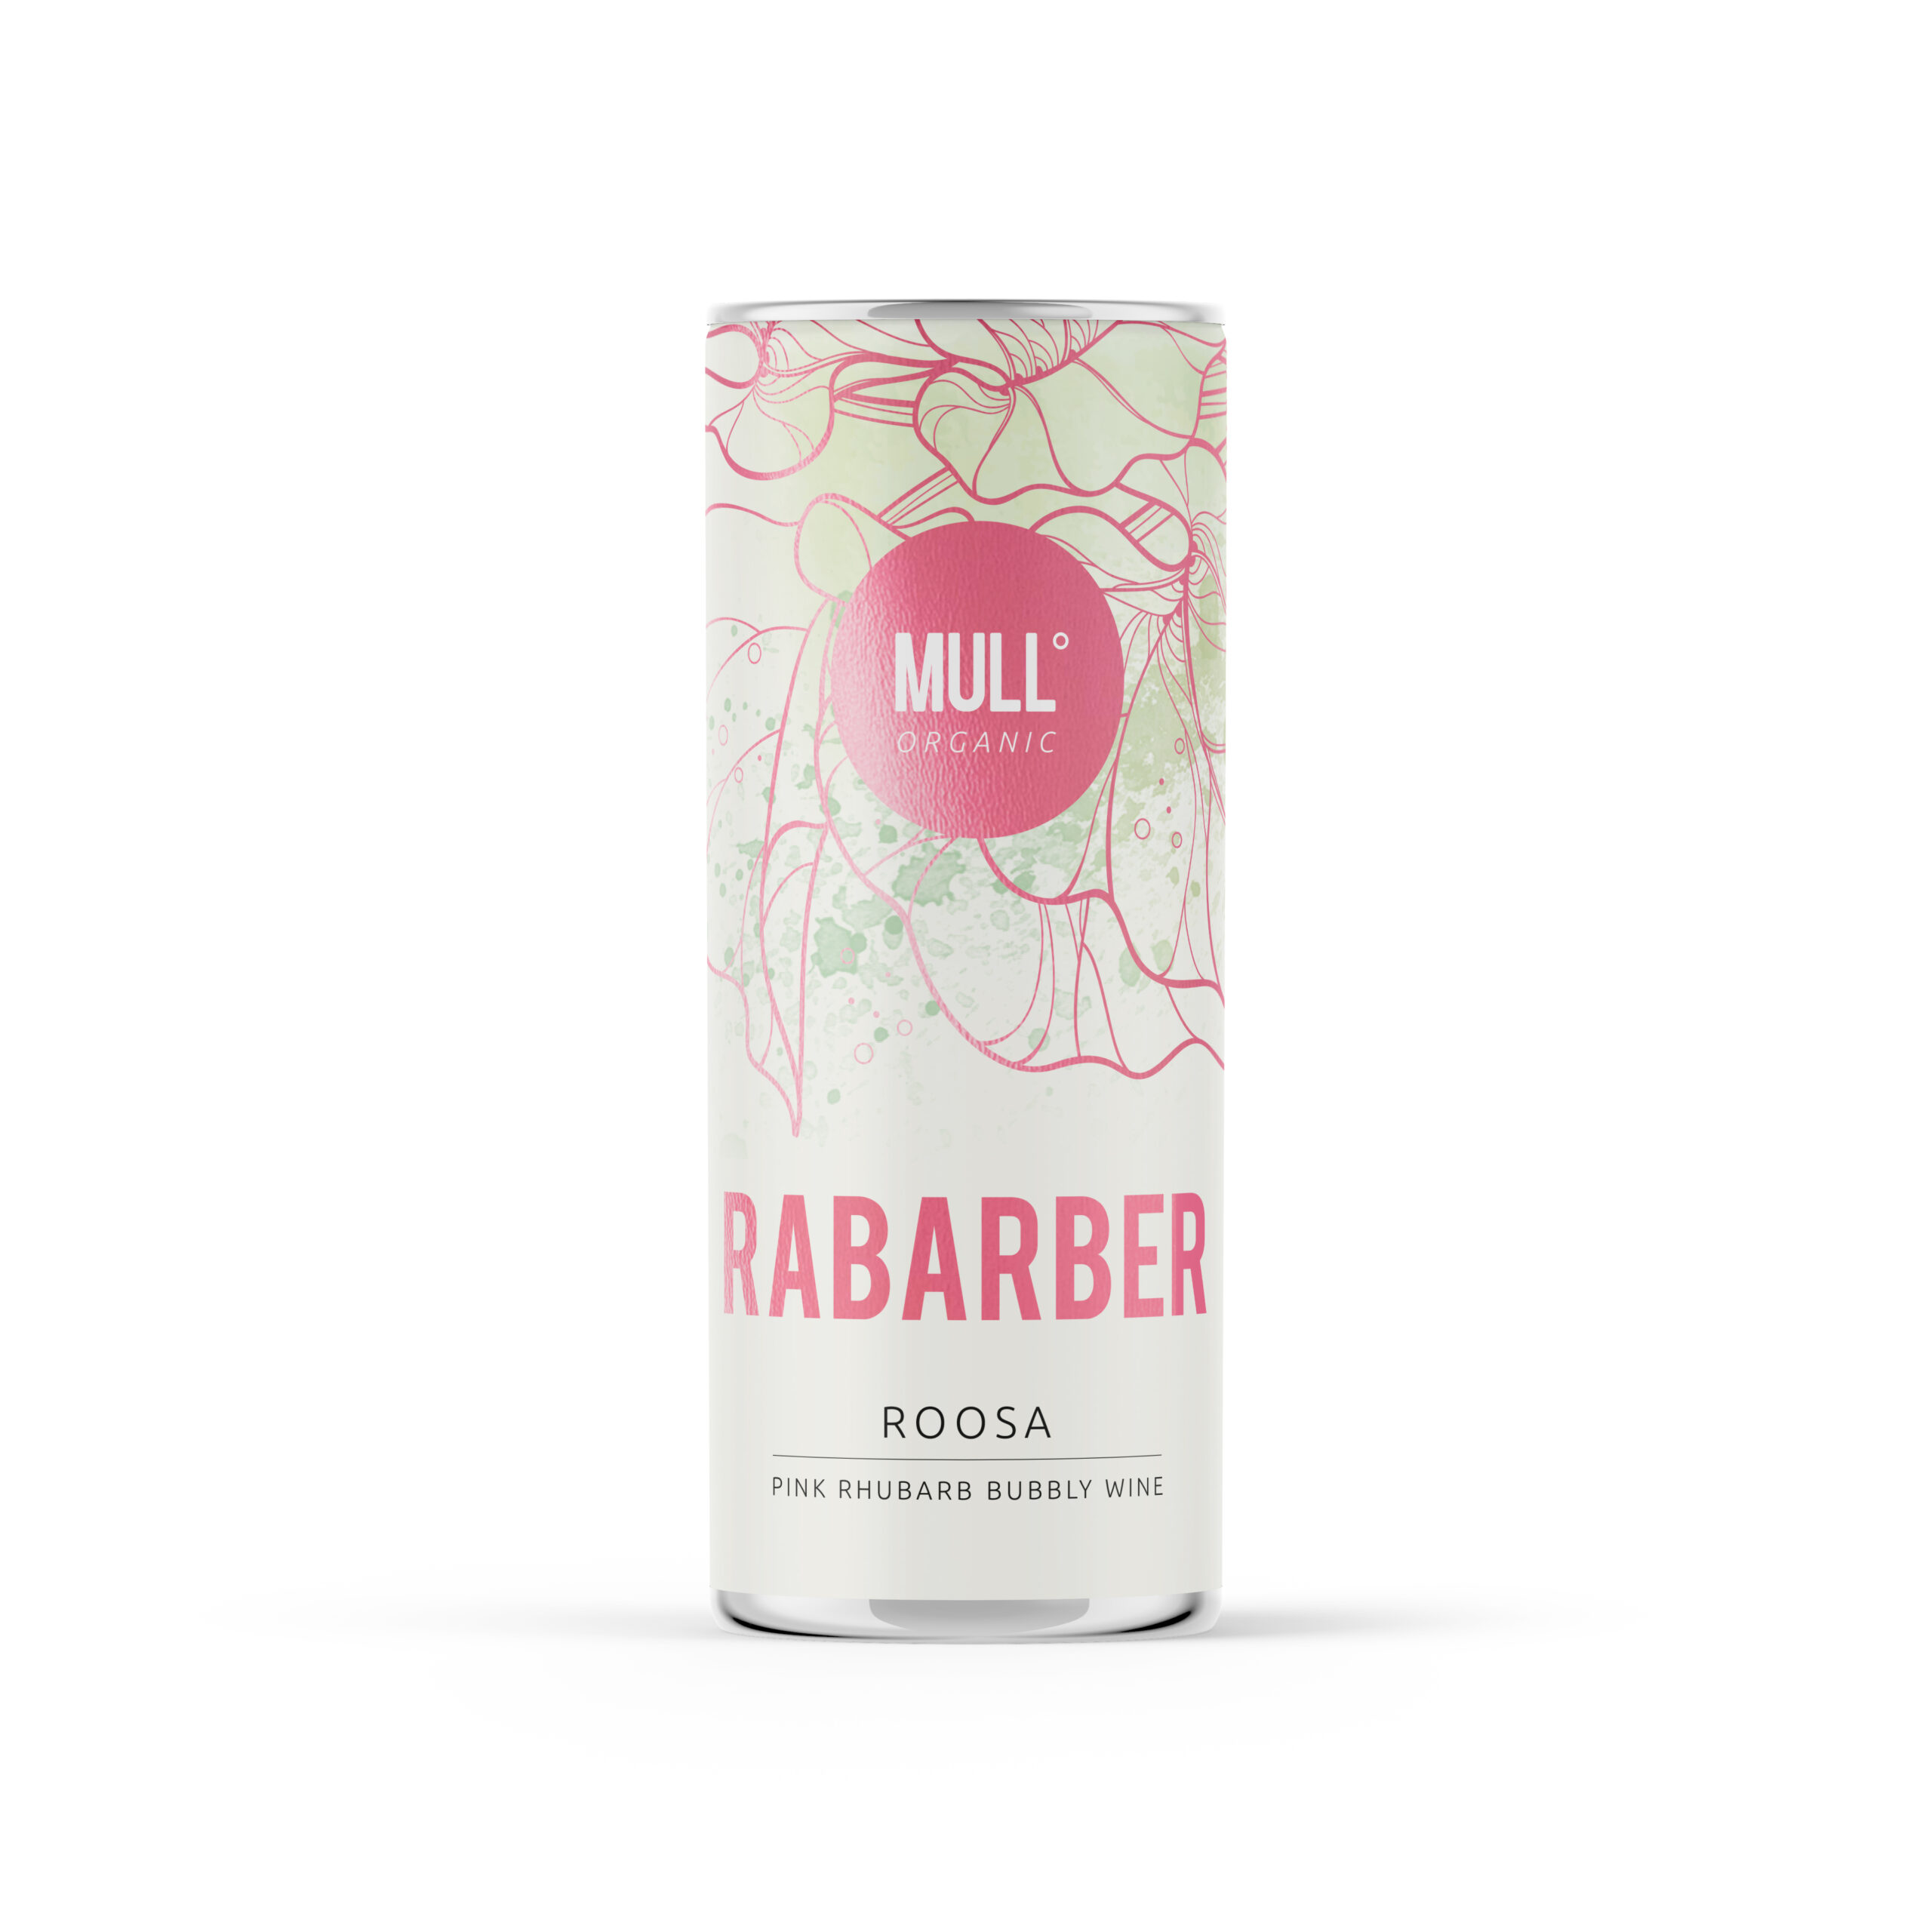 MULL Rabarber roosa